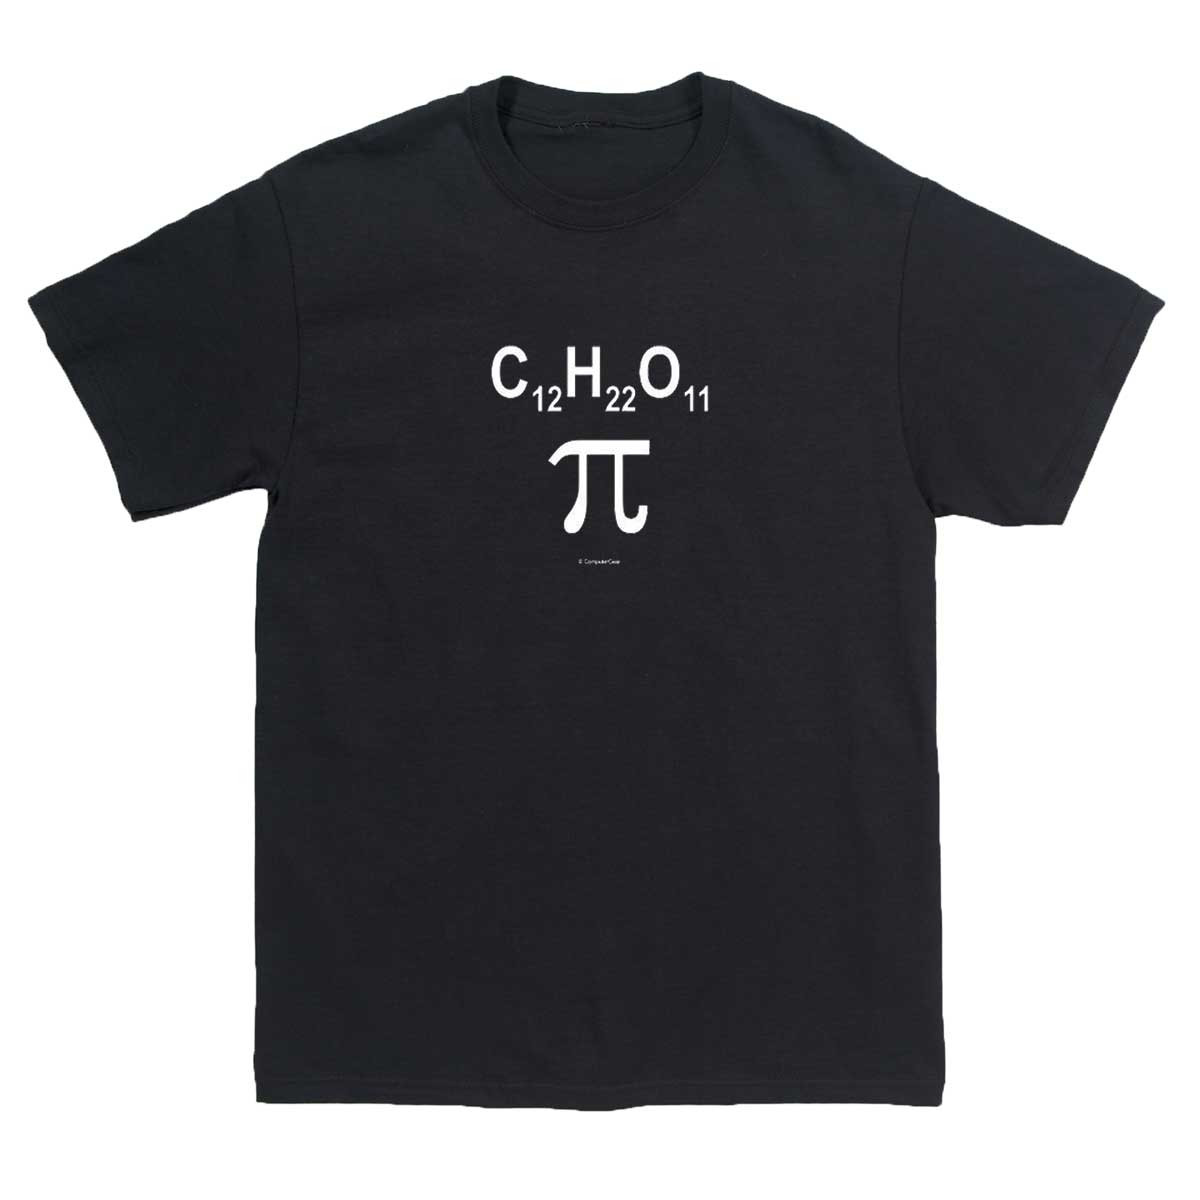 Pi Day Shirts Ideas
 Smart girls won t mind being called a Sugar Pi wearing